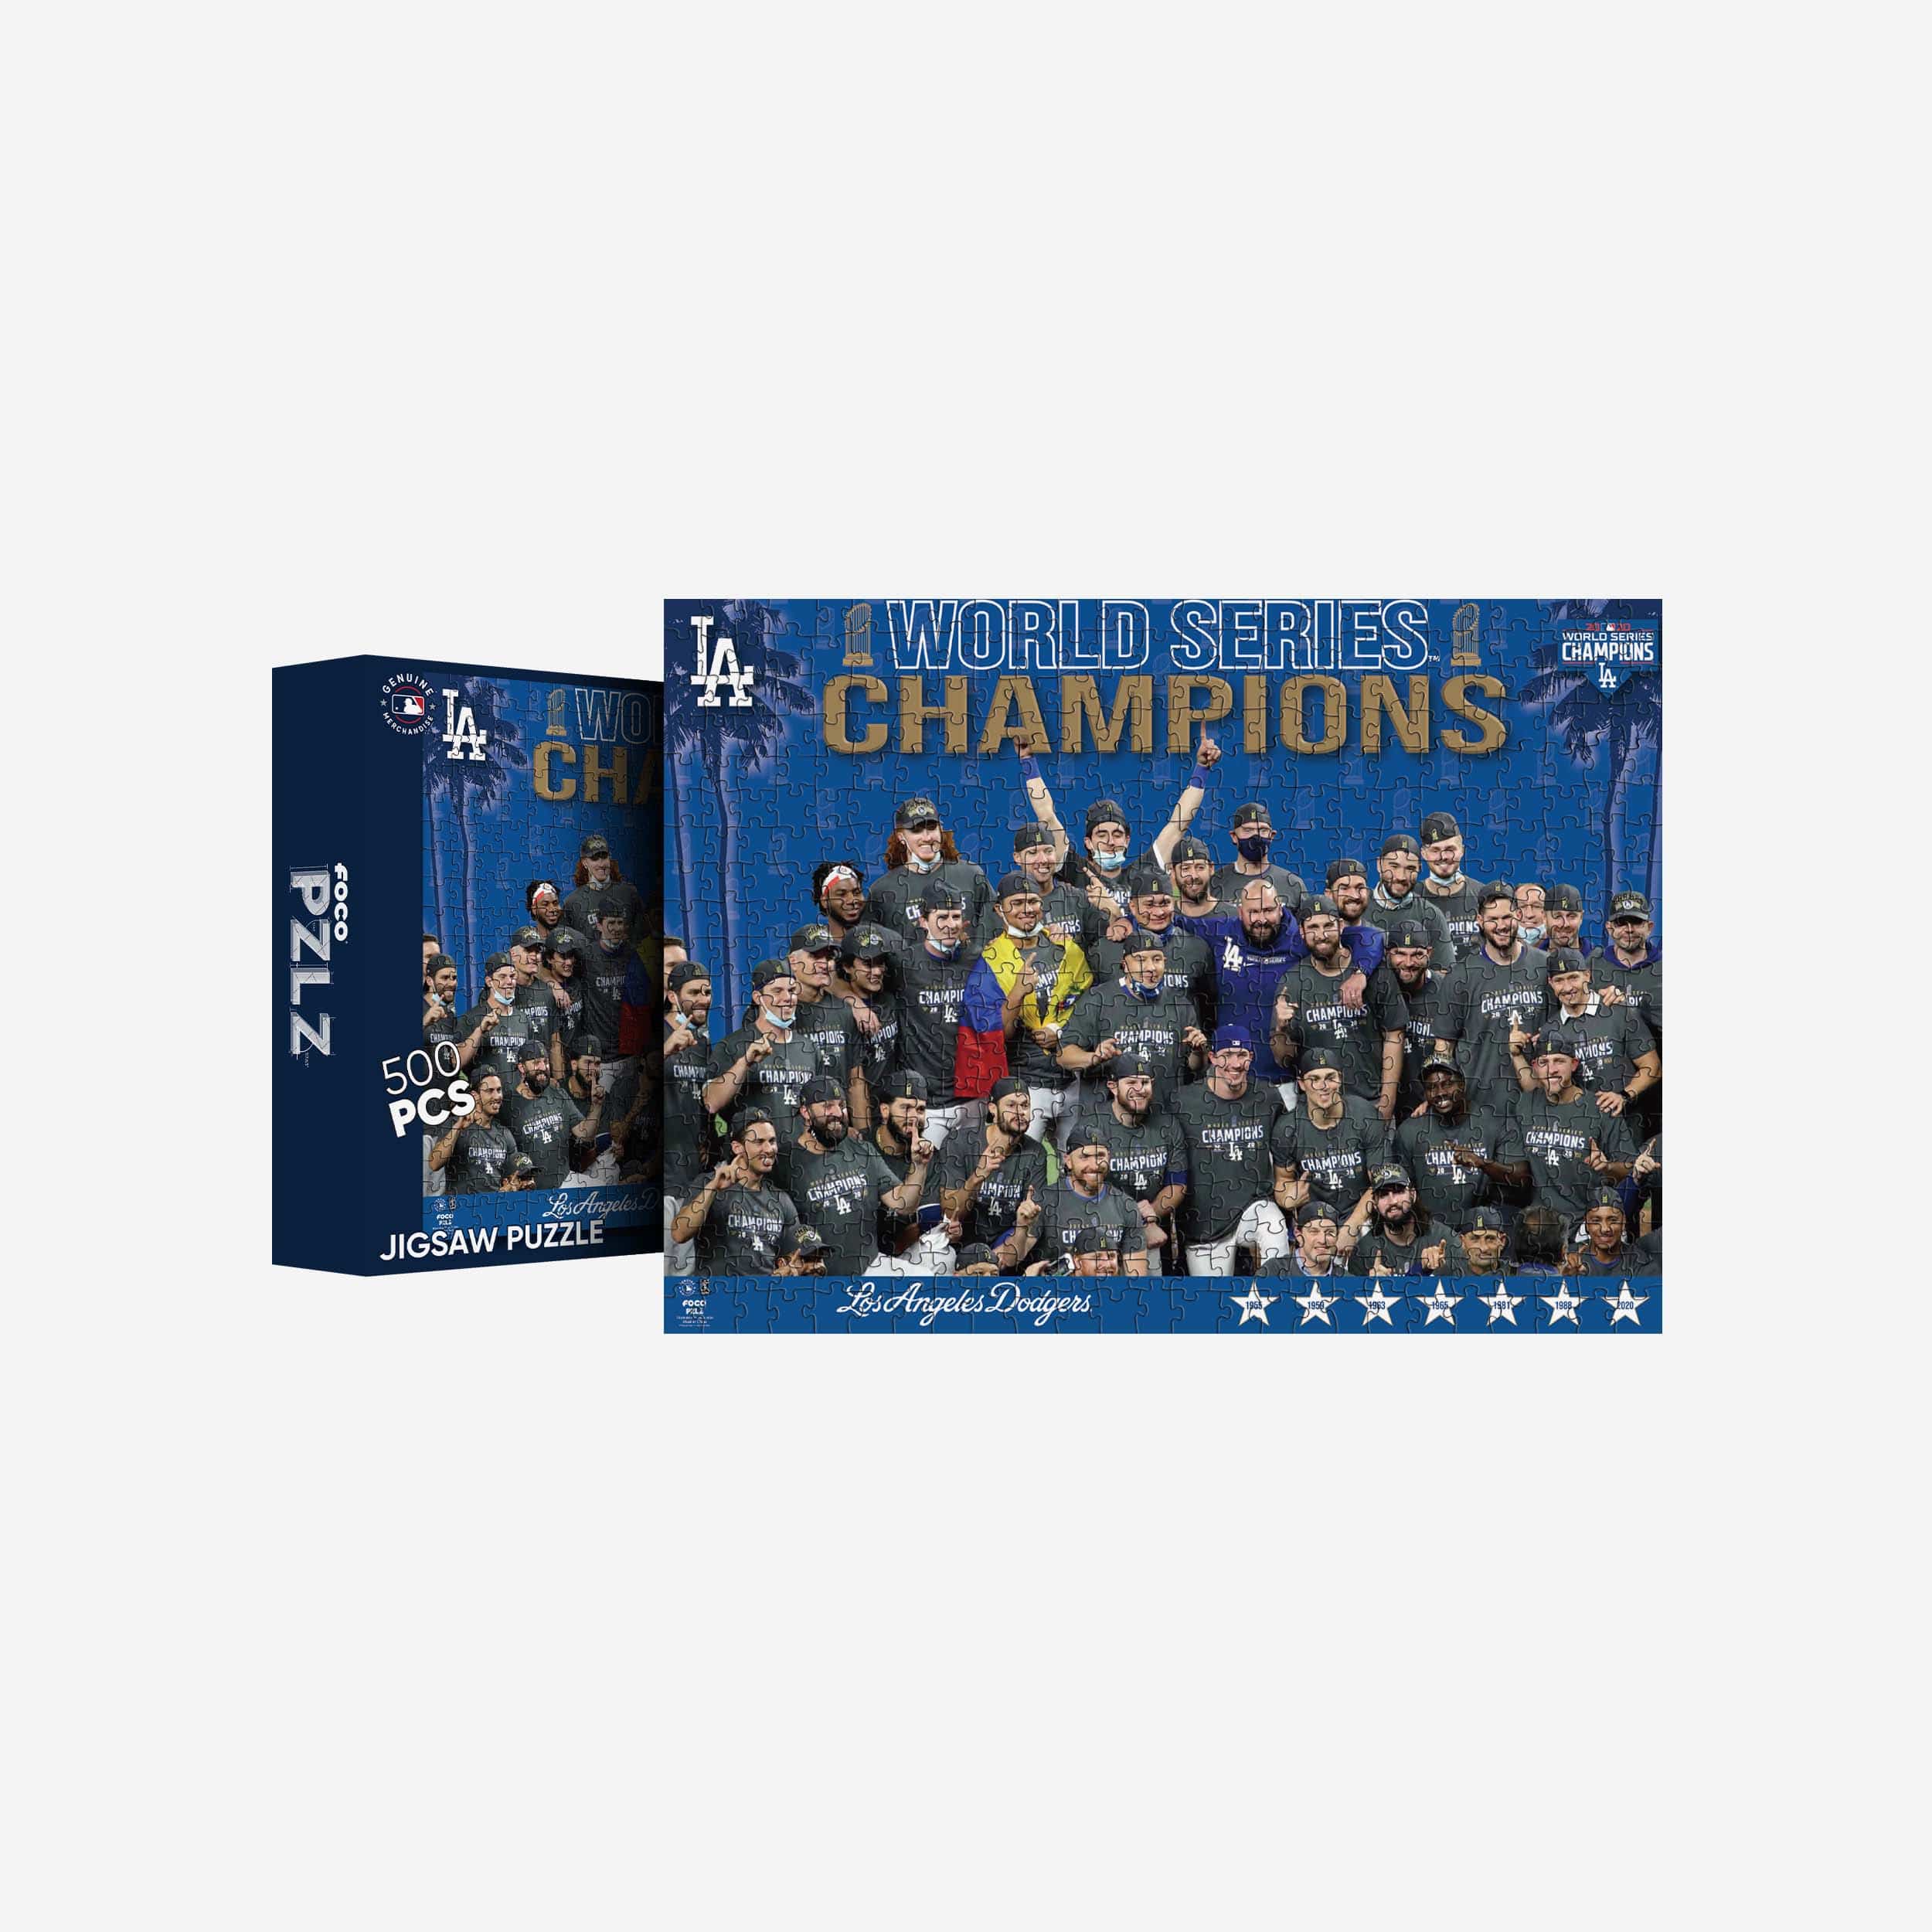 FOCO Los Angeles Dodgers 2020 World Series Champions Team Celebration 500 Piece Jigsaw PZLZ -